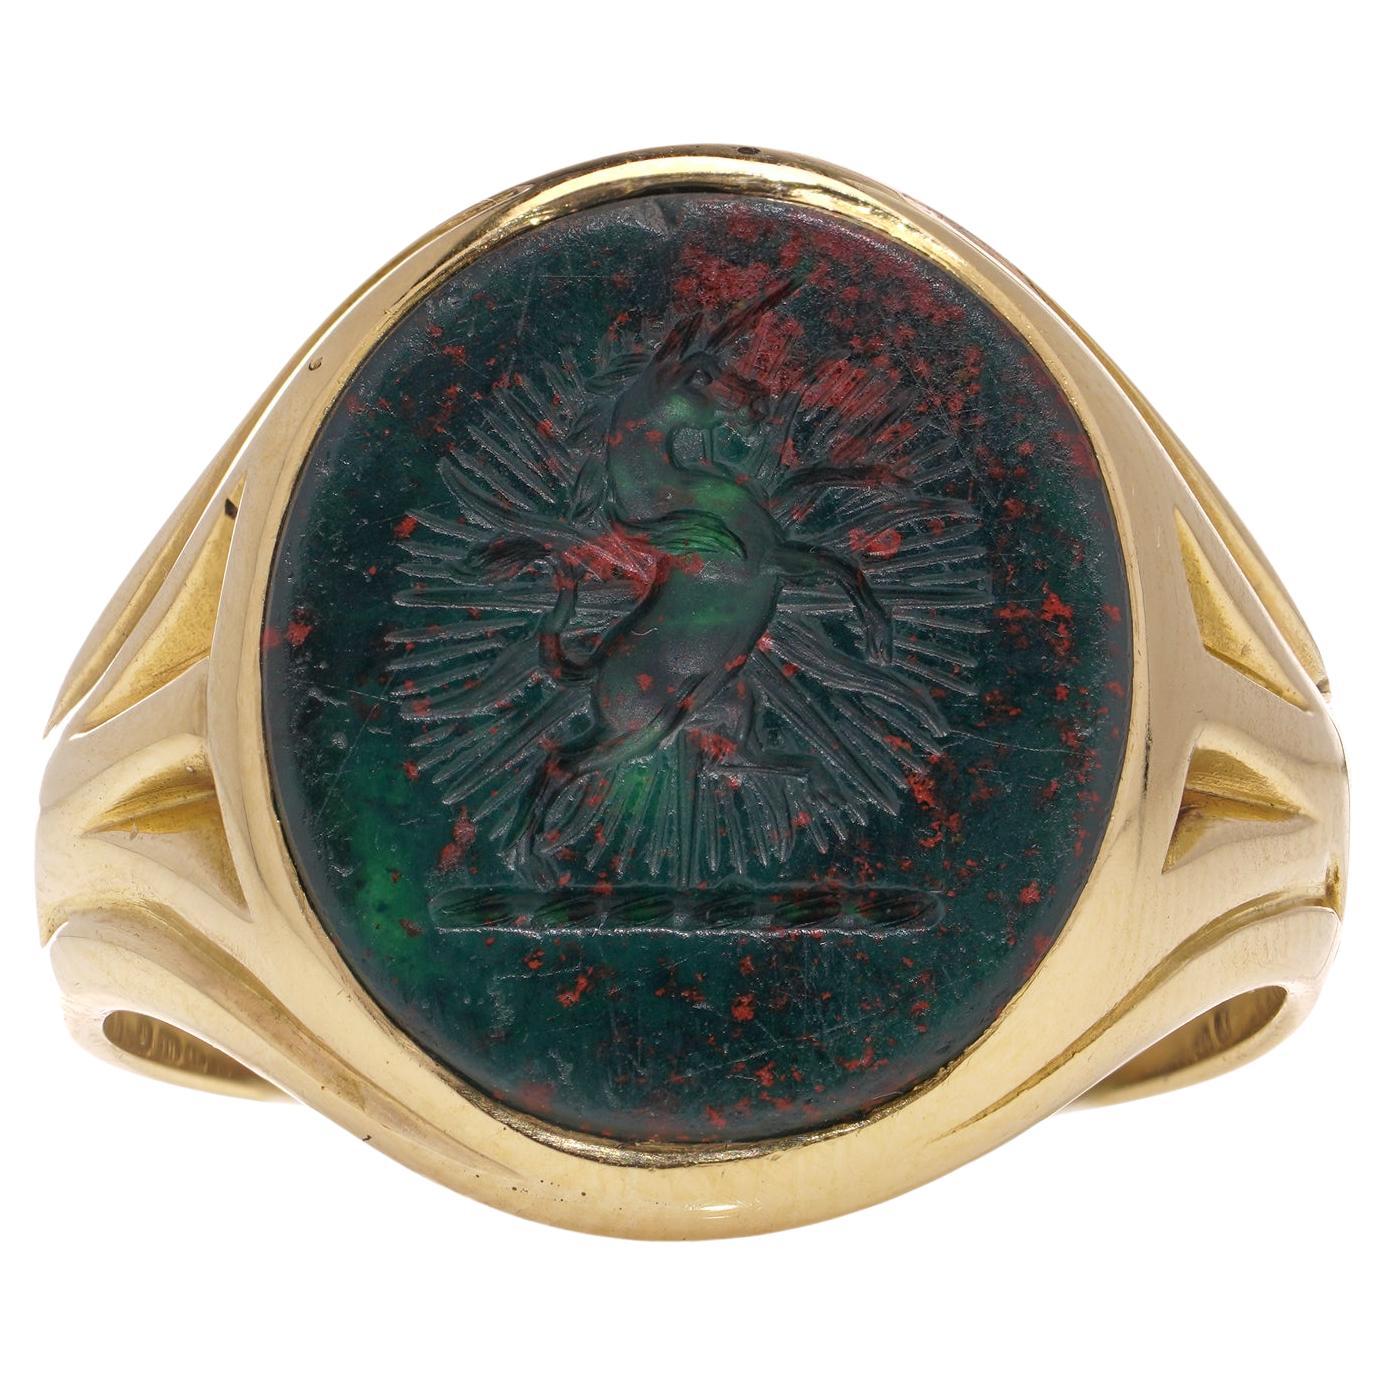  18kt. gold intaglio bloodstone signet ring, featuring a rampant unicorn